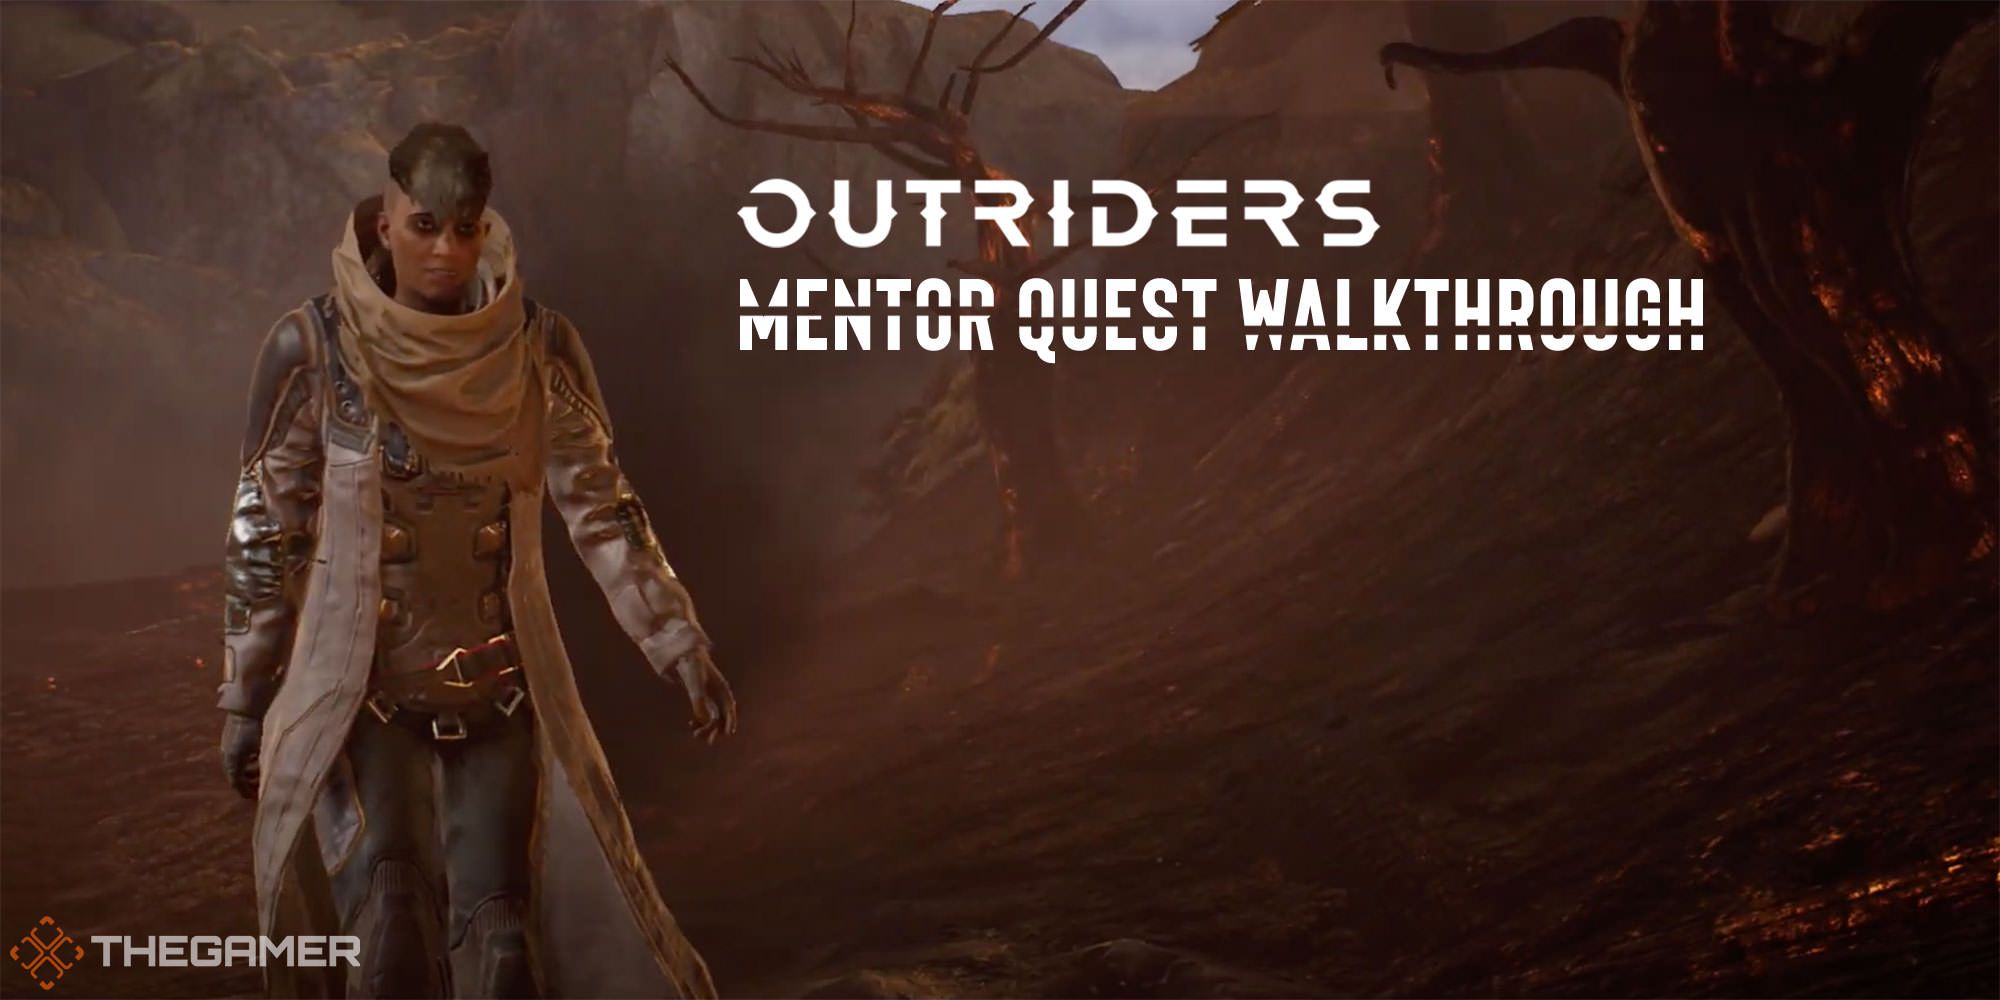 Outriders Mentor Quest Walkthrough